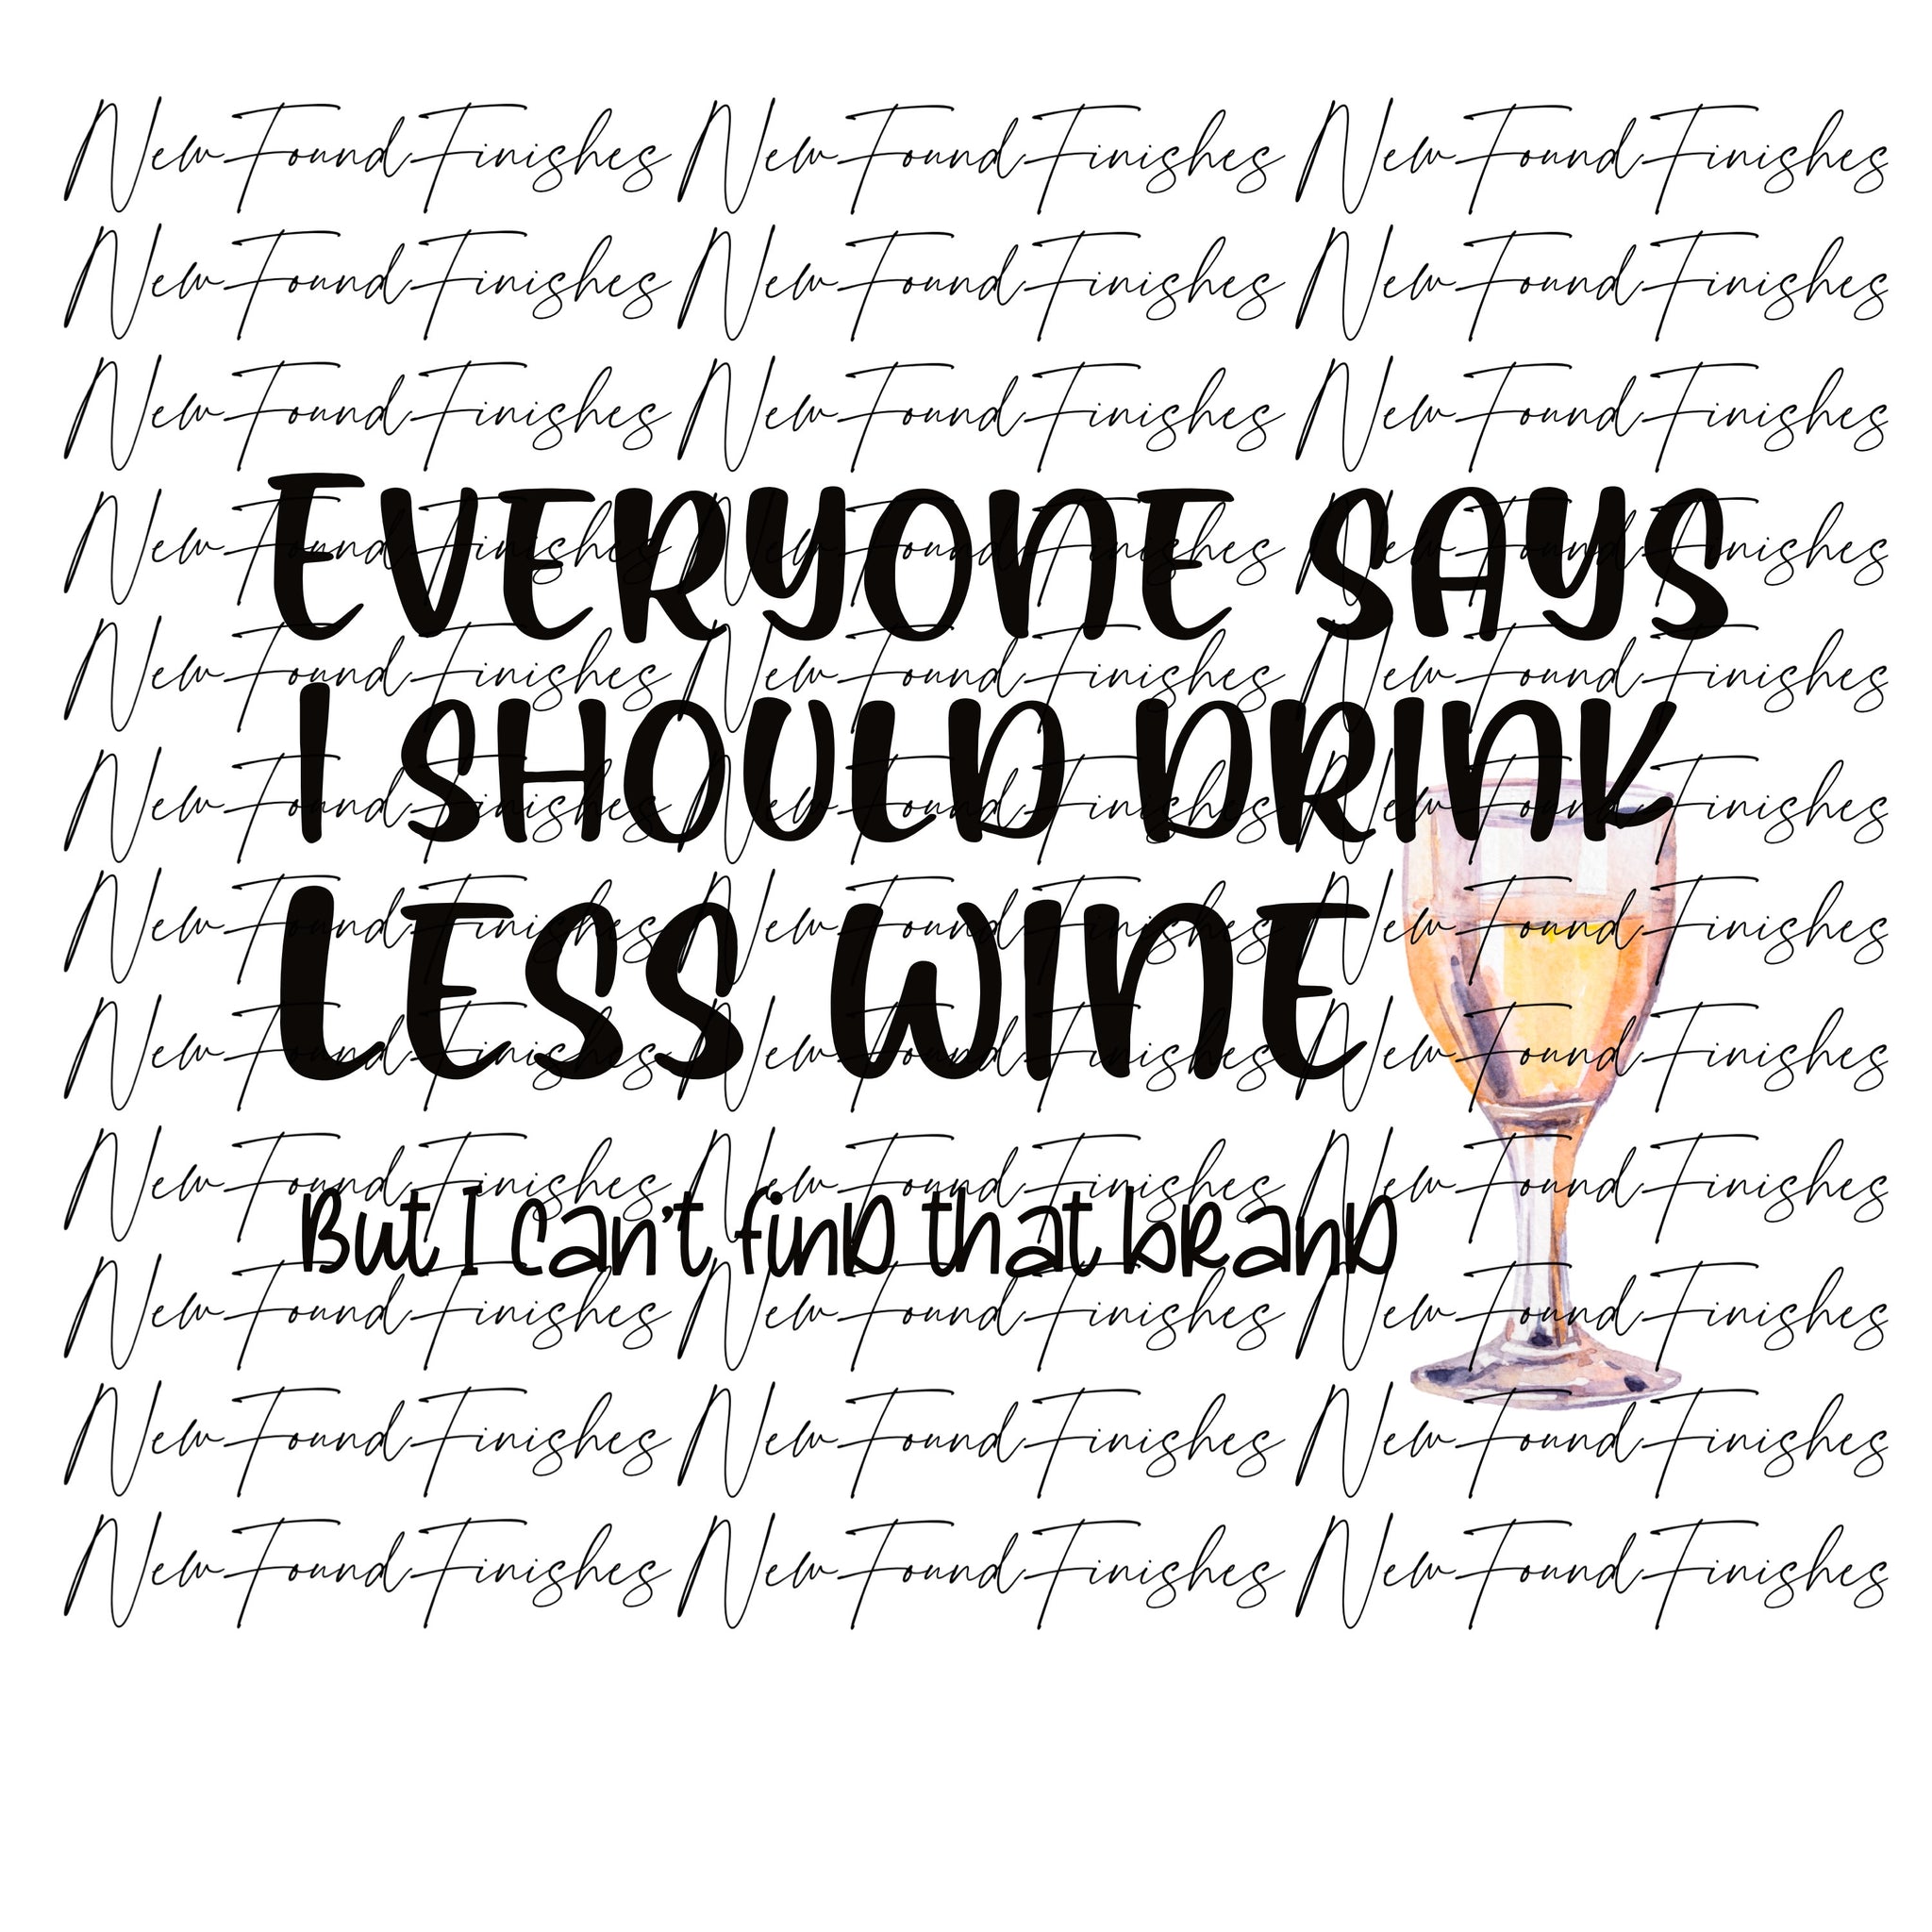 Less wine